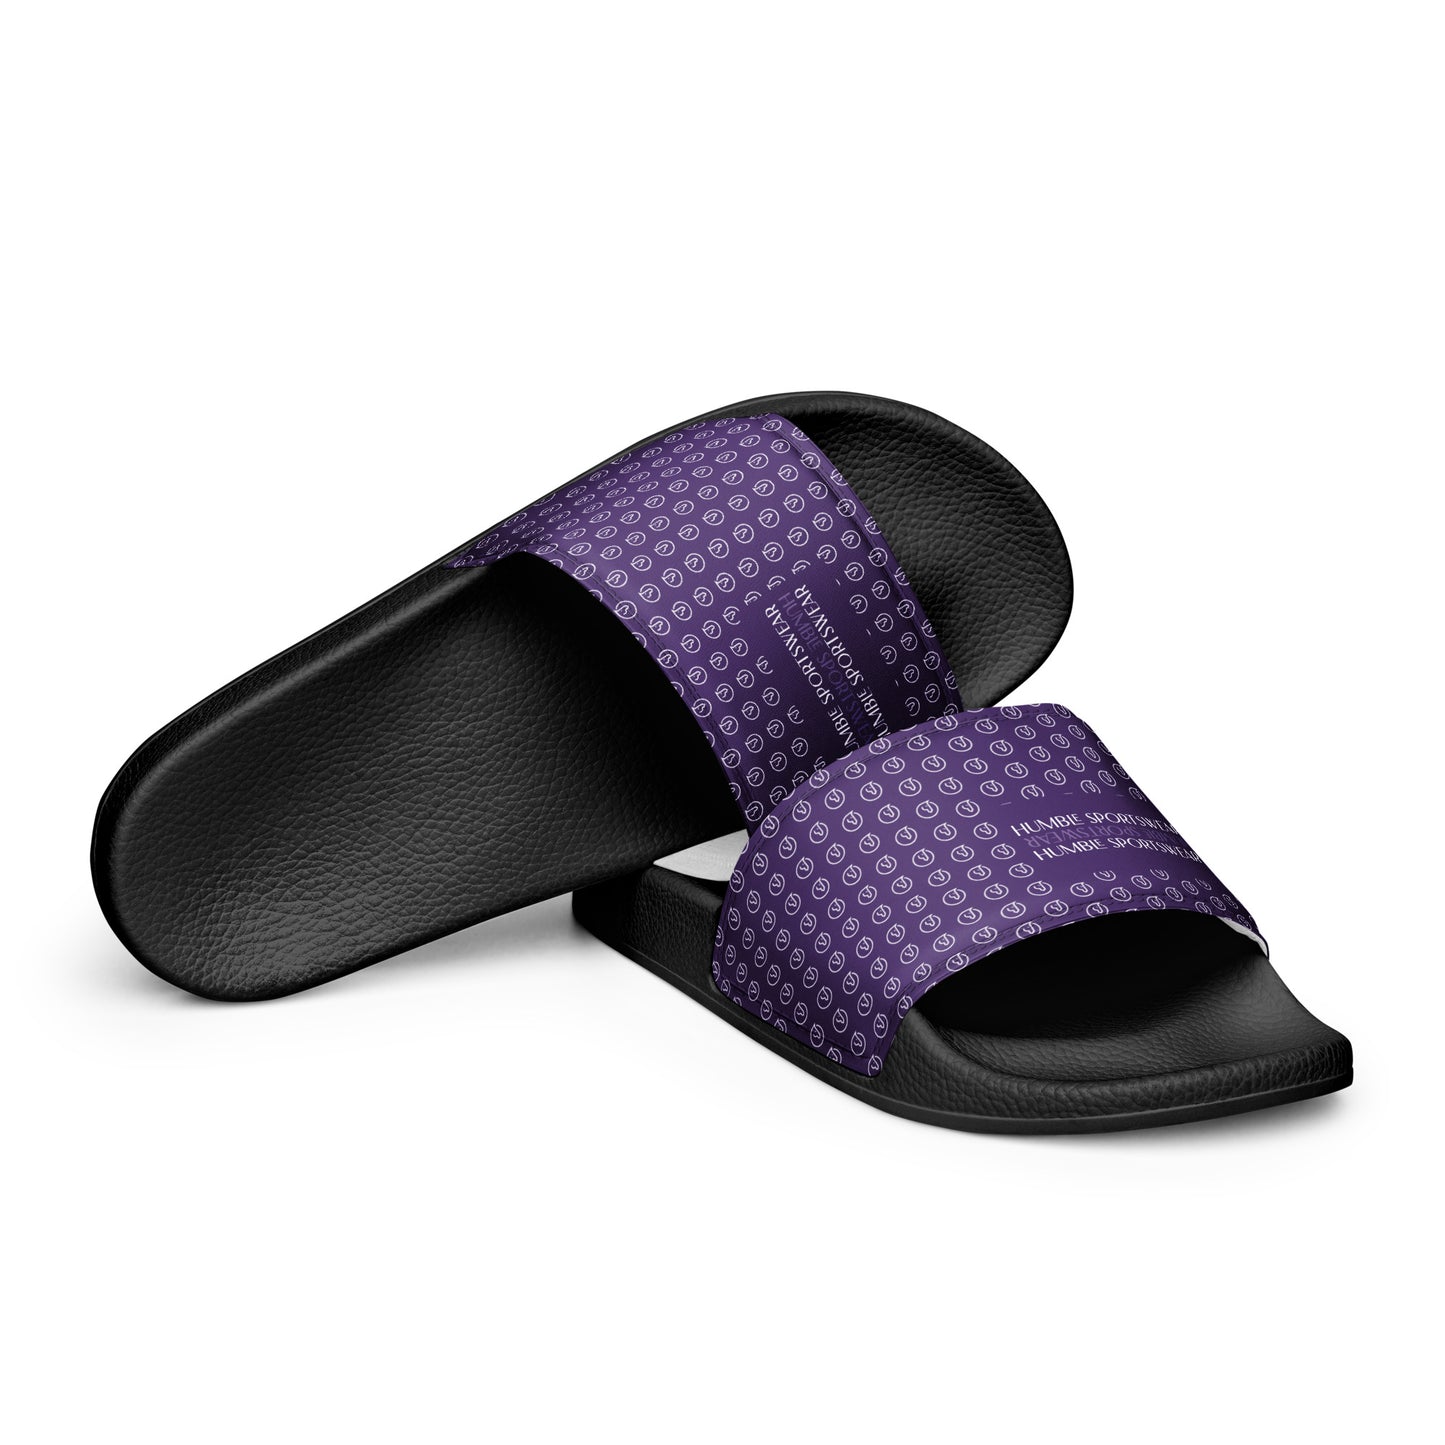 Humble Sportswear, men's casual slip on open toe Color Match purple slides sandals